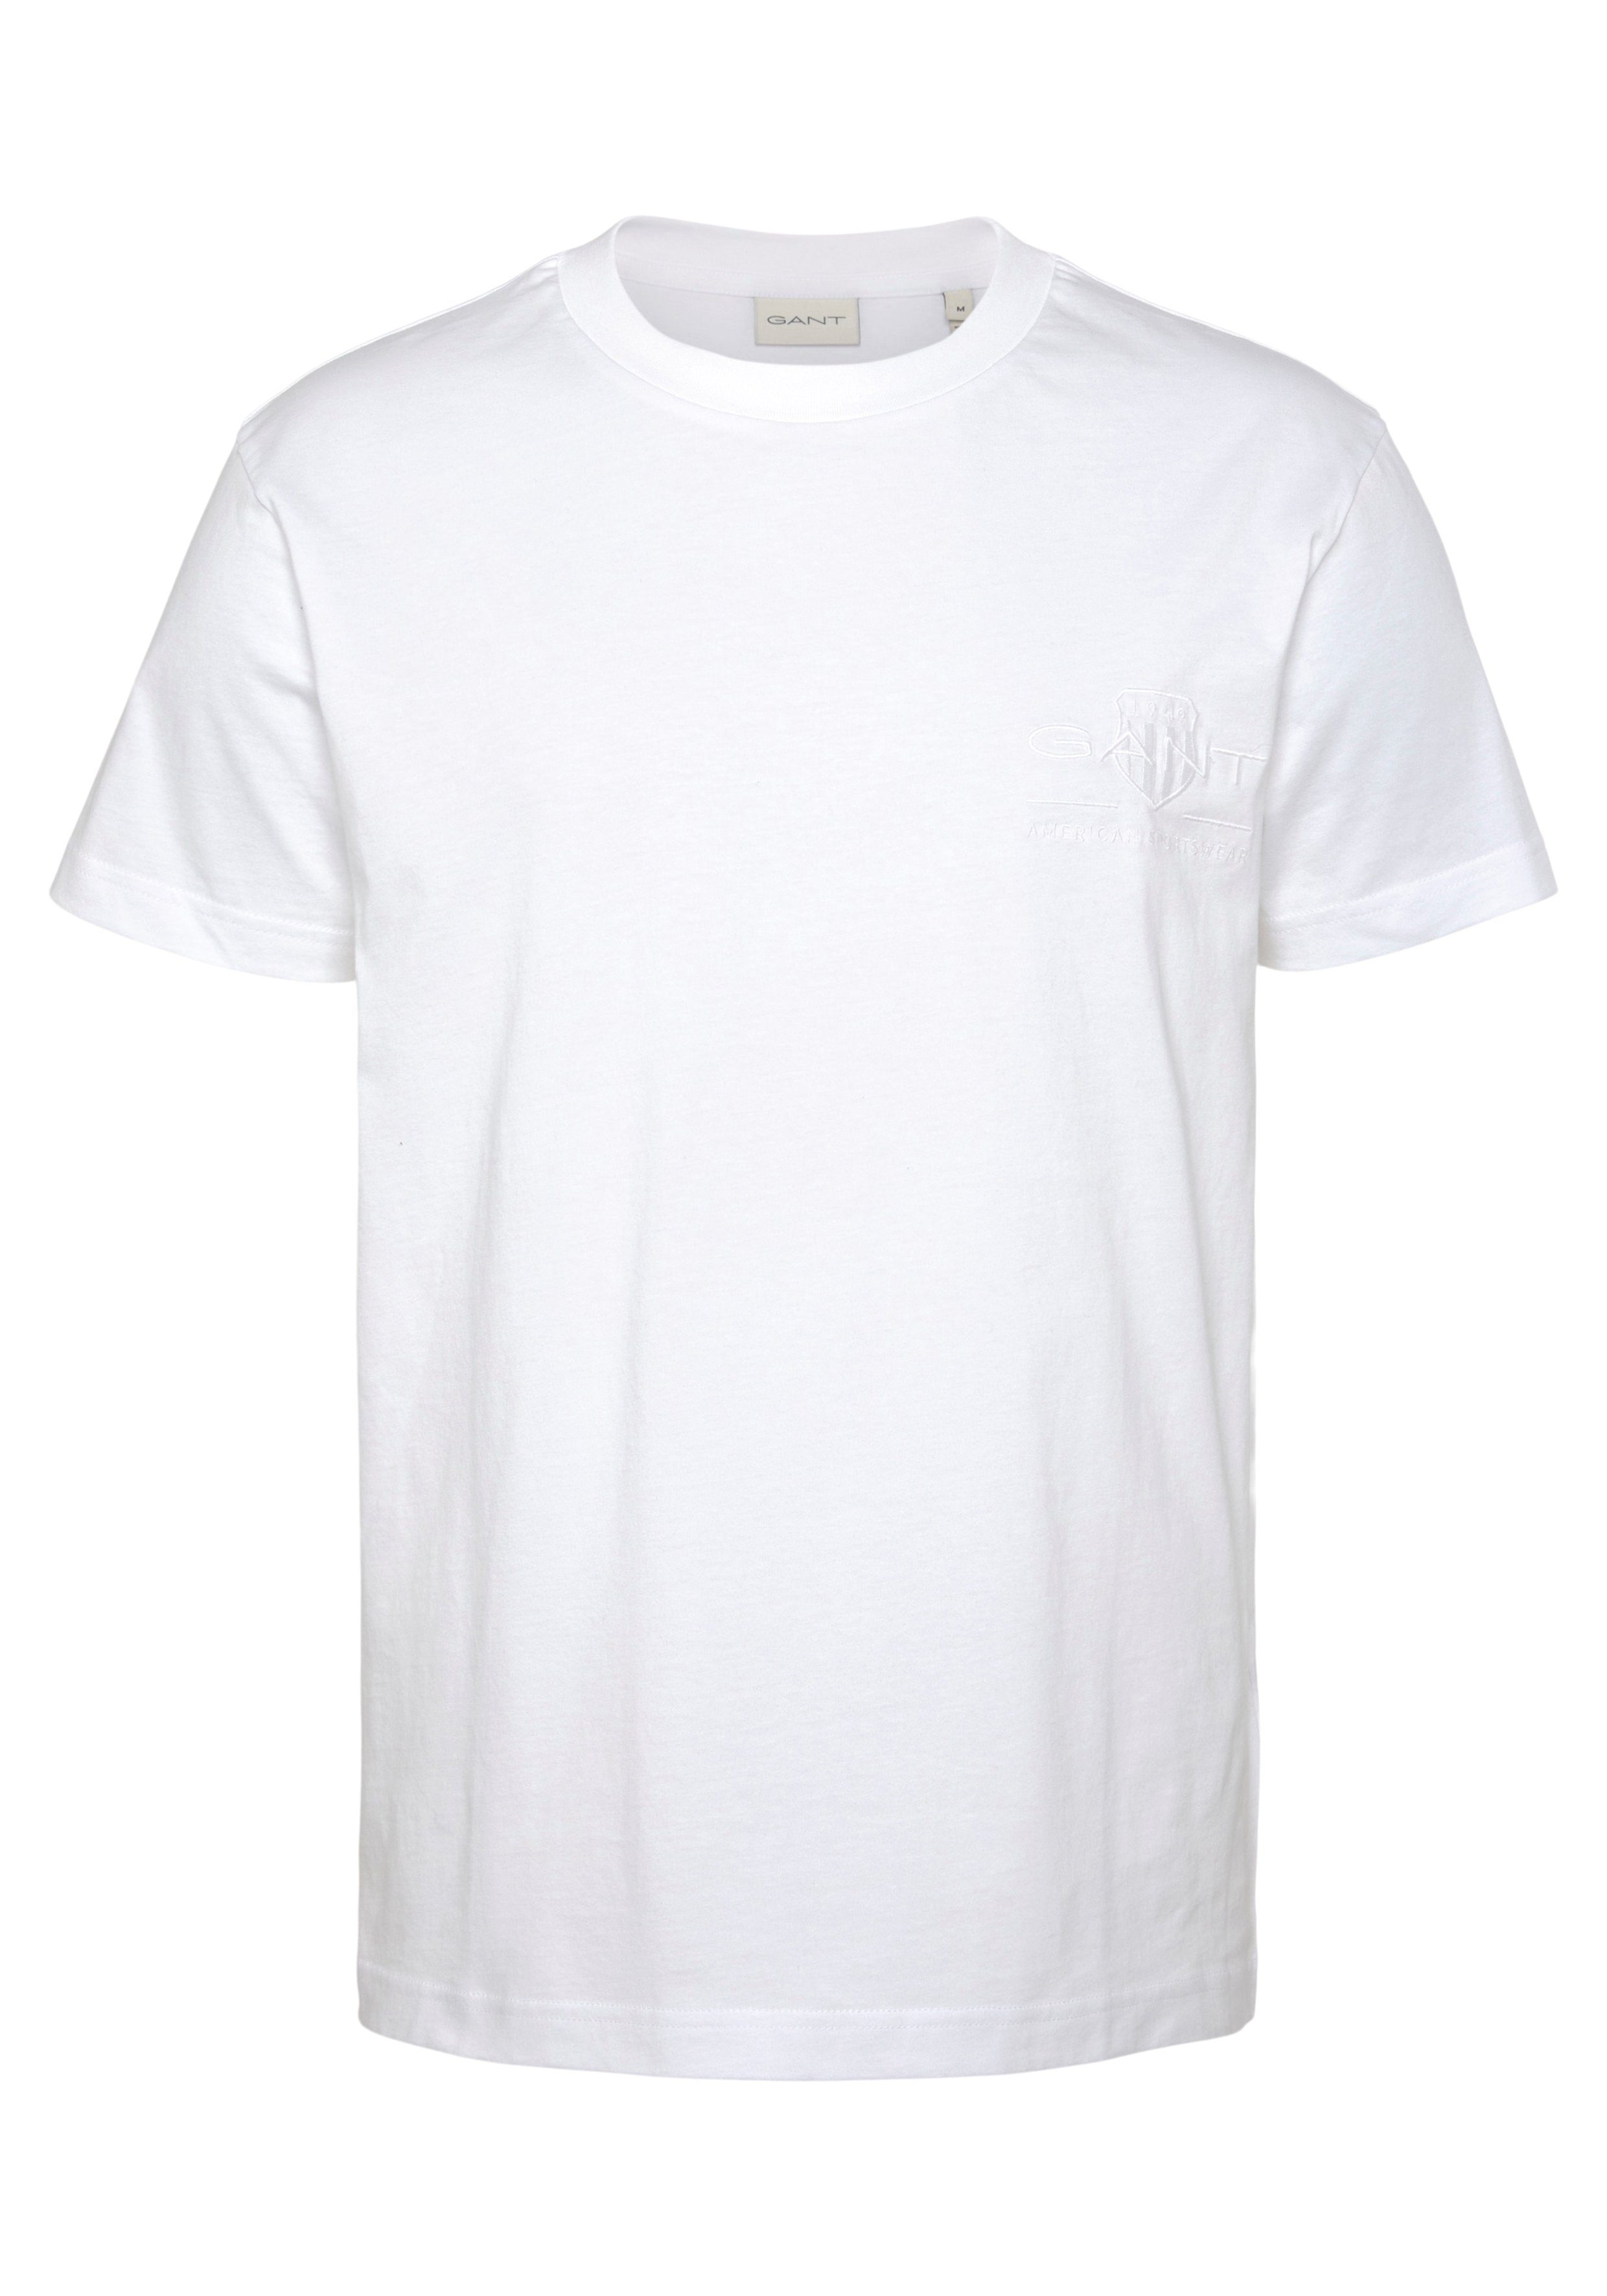 Gant T-Shirt REG SS mit TSHIRT Brust der auf TONAL SHIELD MED Logostickerei